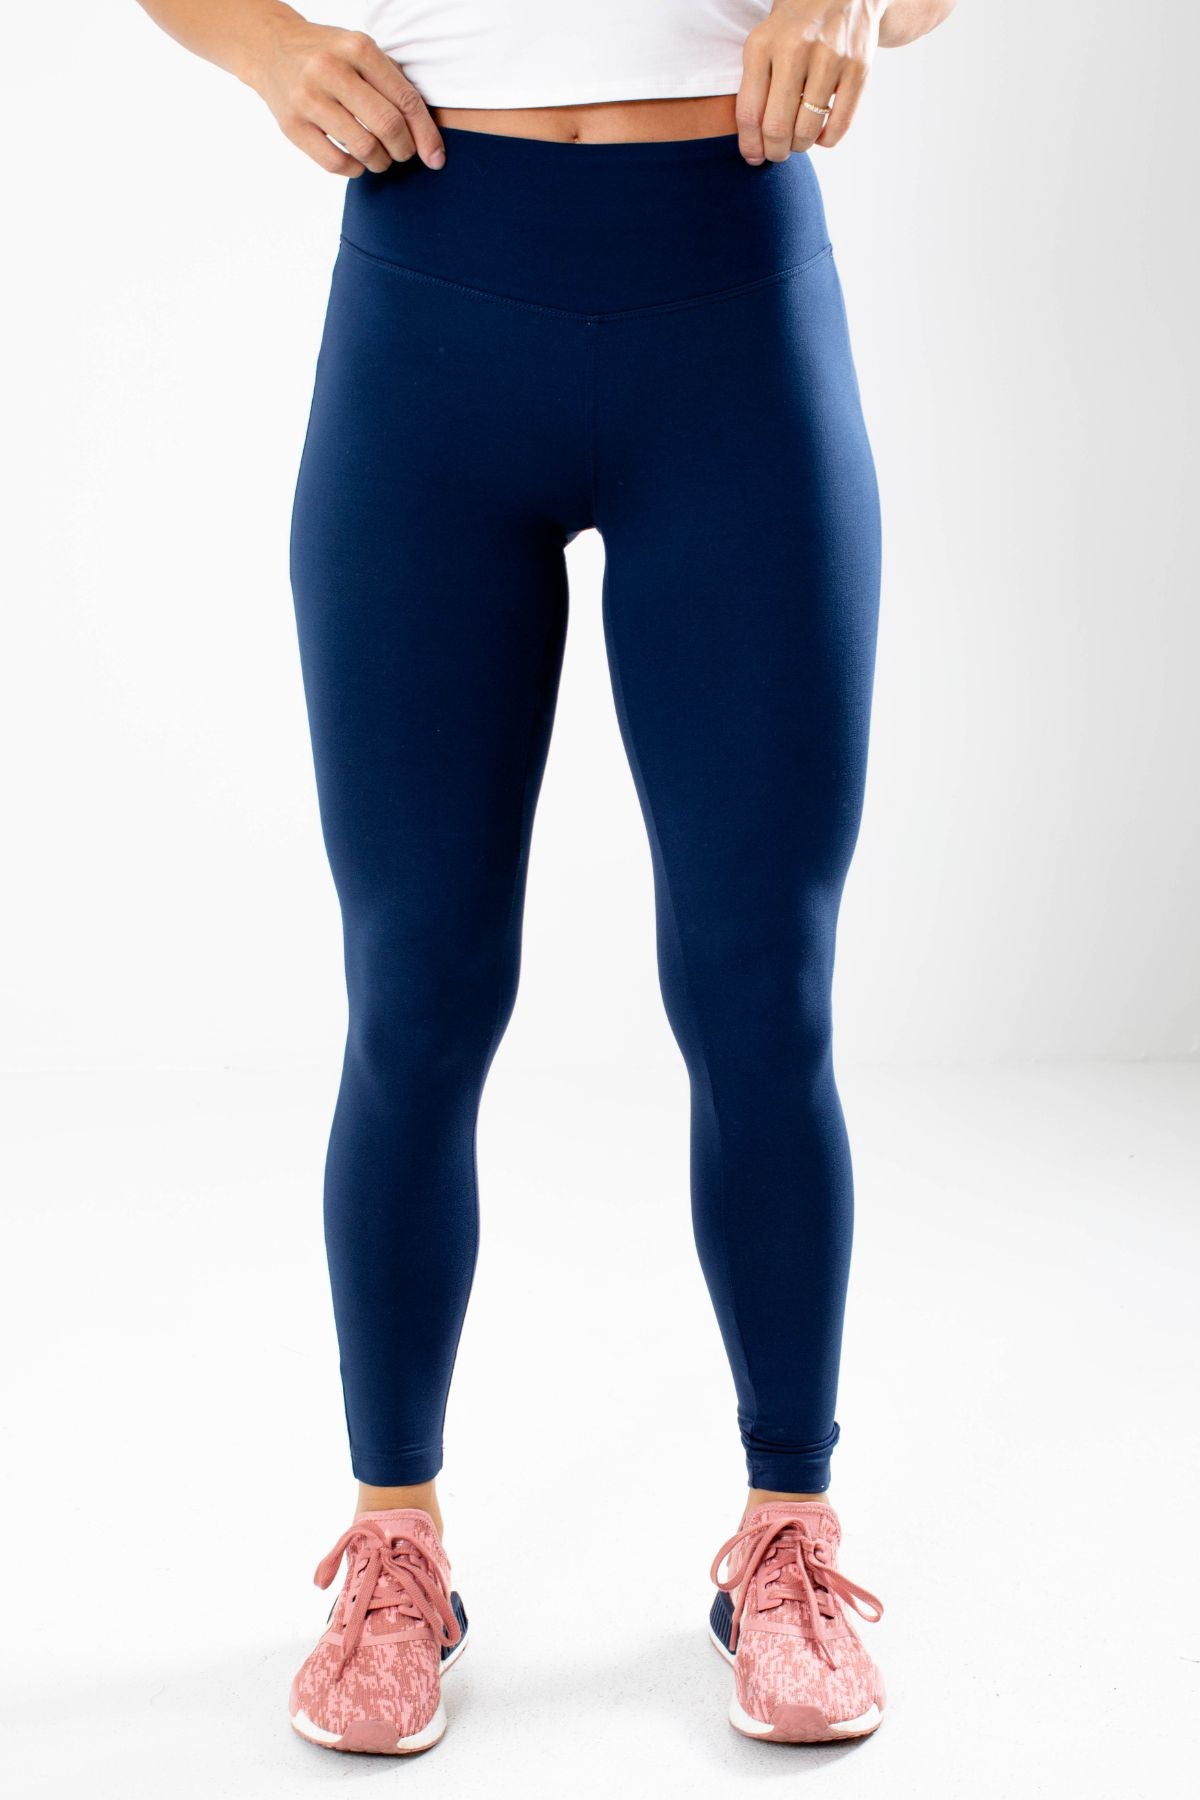 Women's Dark Blue Cute and Comfortable Boutique Activewear Leggings